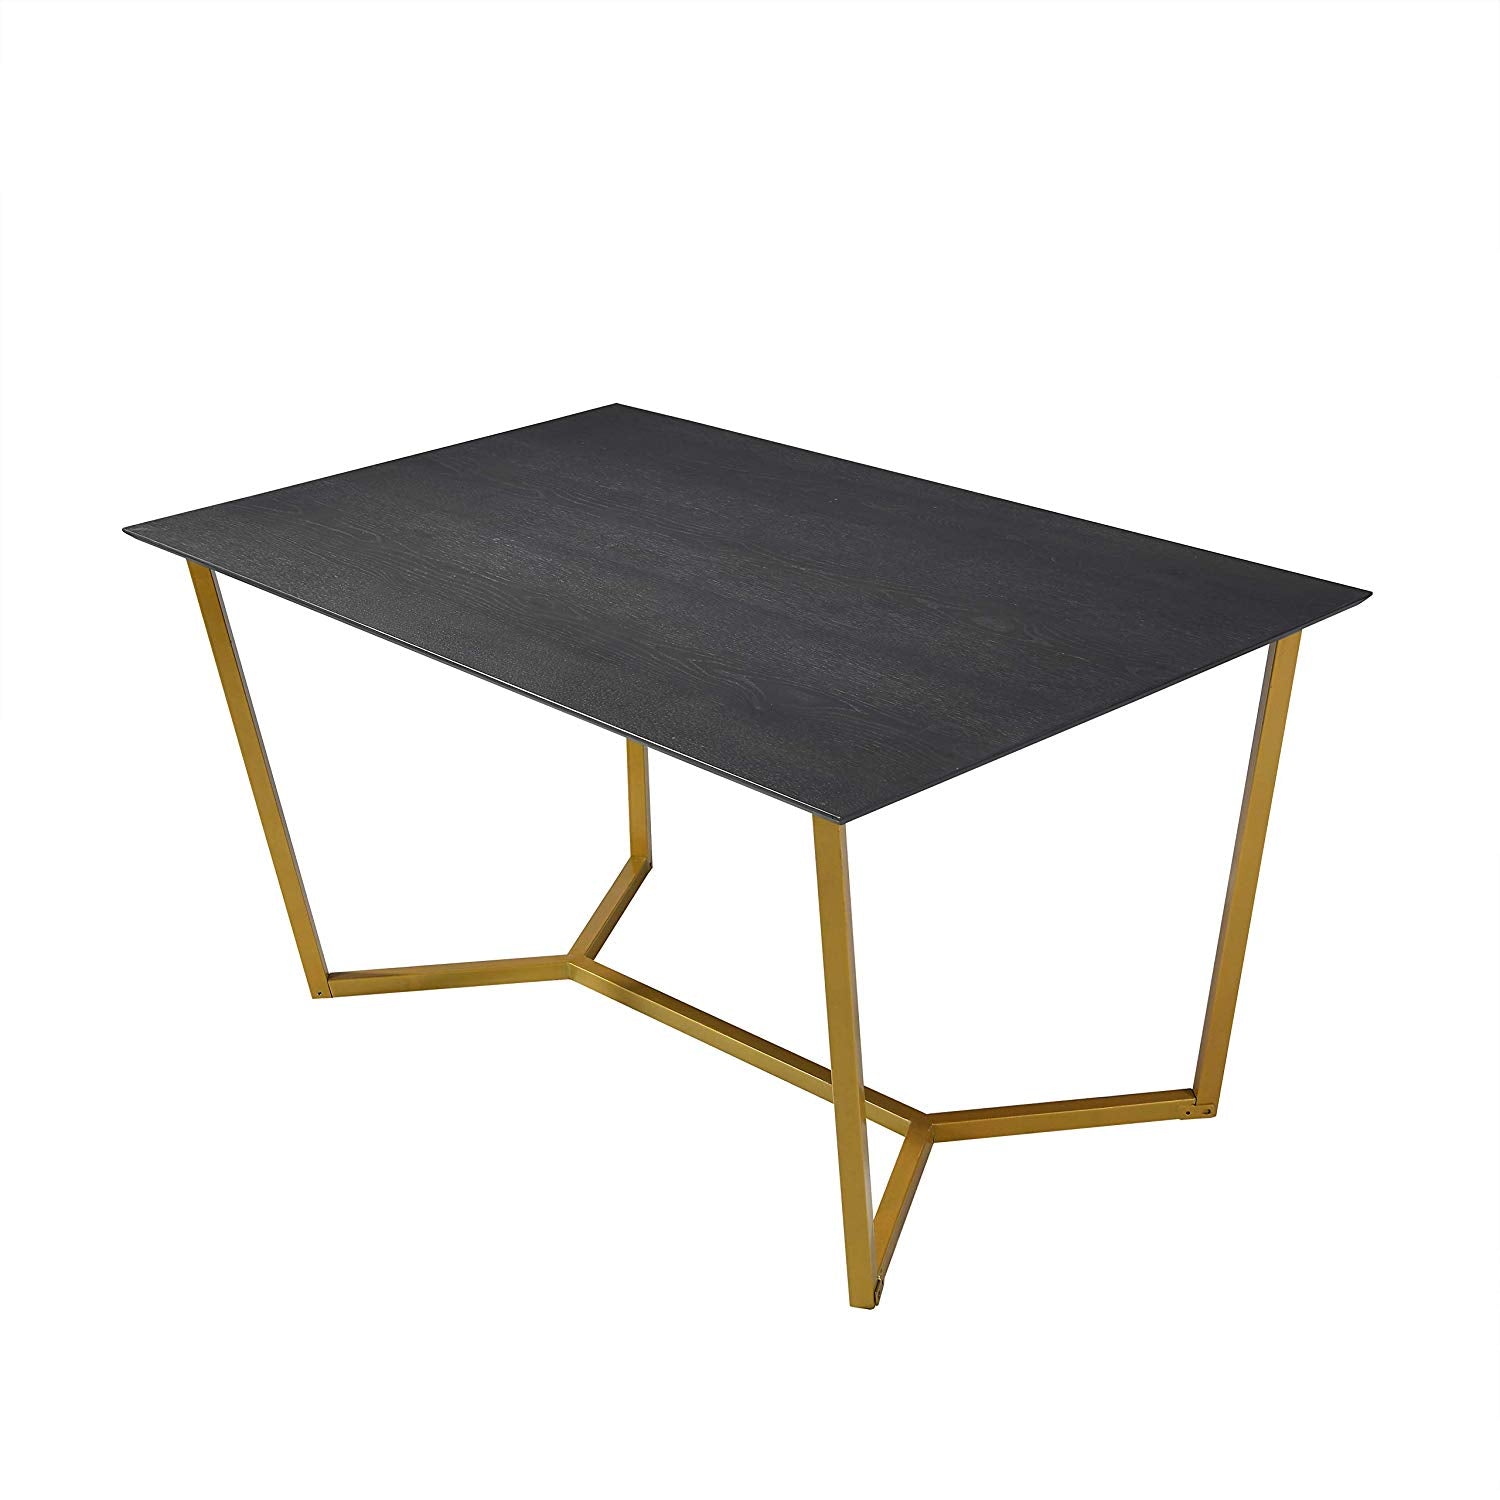 SIERRE 6 Seater Dark Oak Dining Table with Geometric Metal Legs